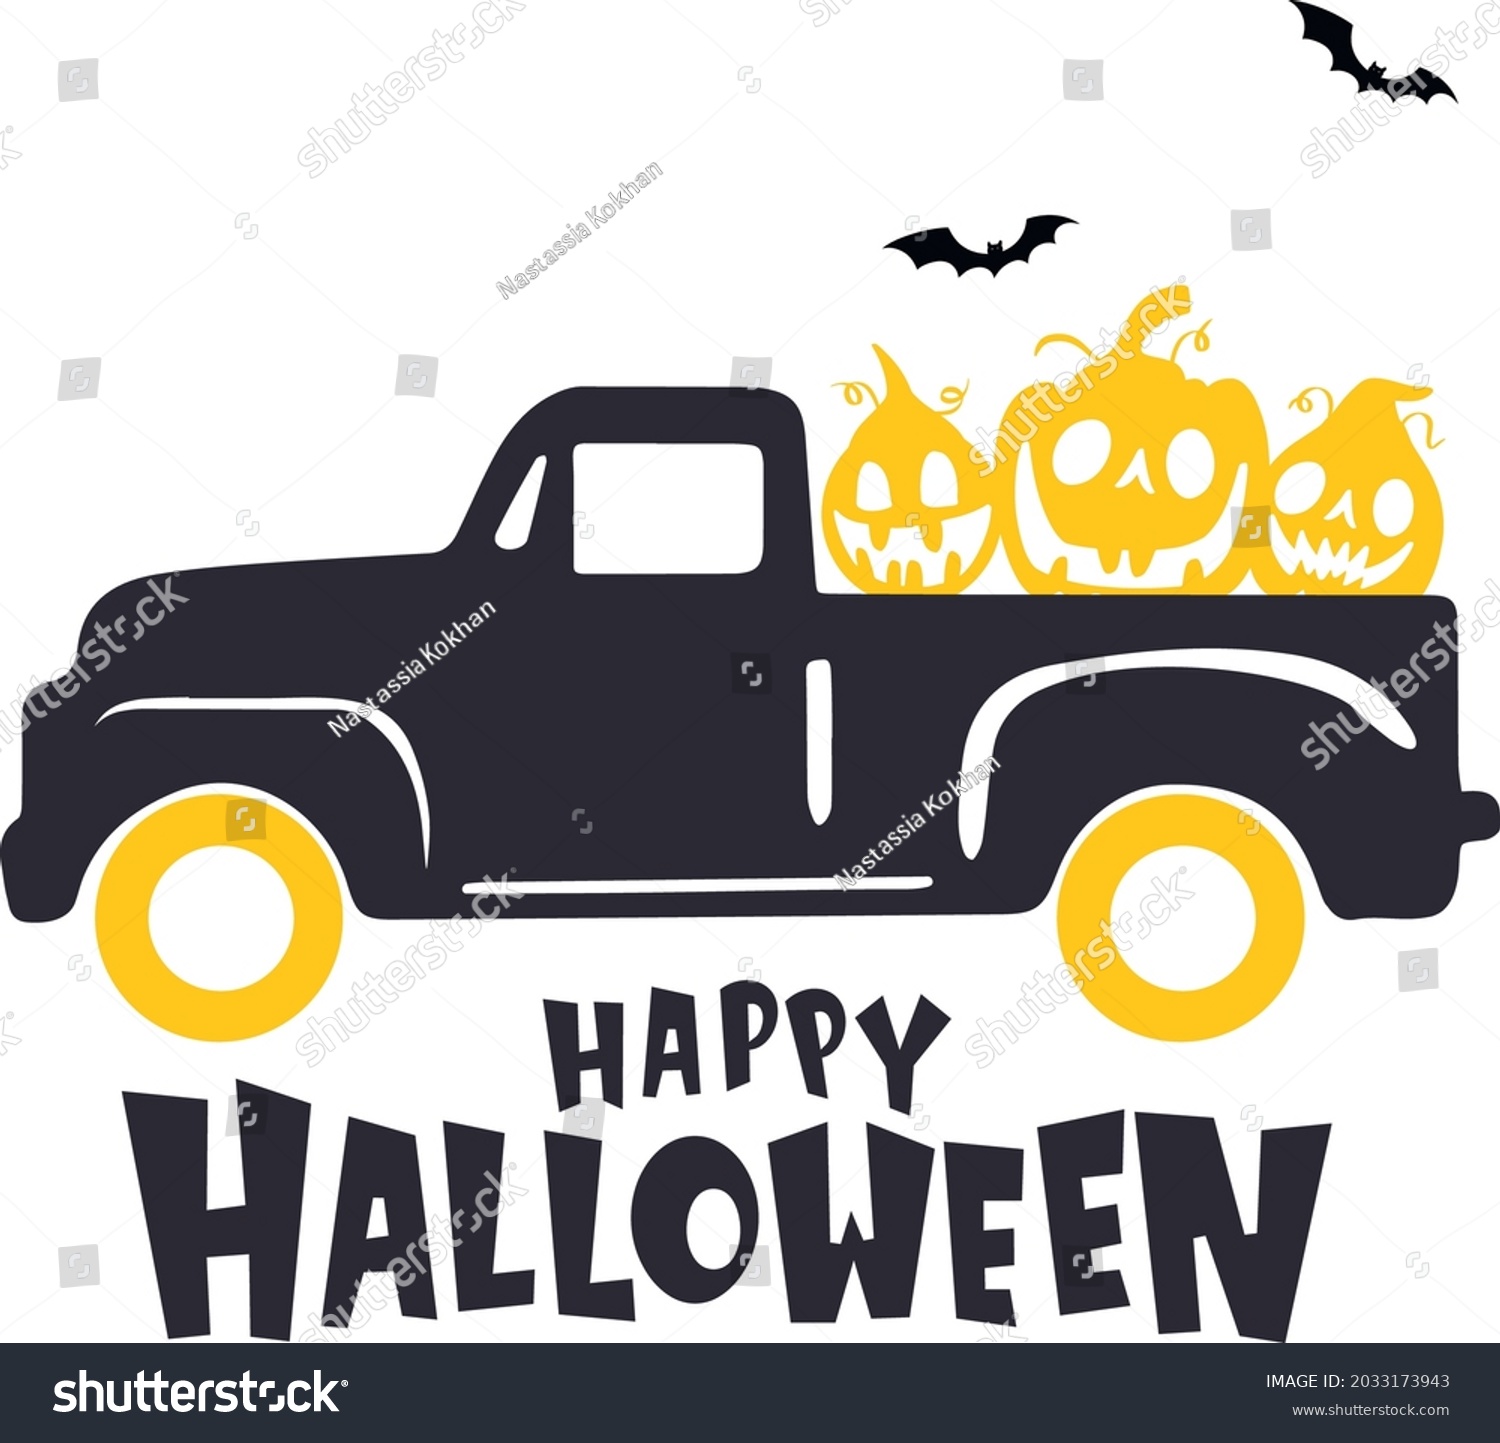 SVG of Happy halloween truck svg vector Illustration isolated on white background.Halloween pumpkin truck. Halloween truck with pumpkin face sublimation. Halloween shirt design svg